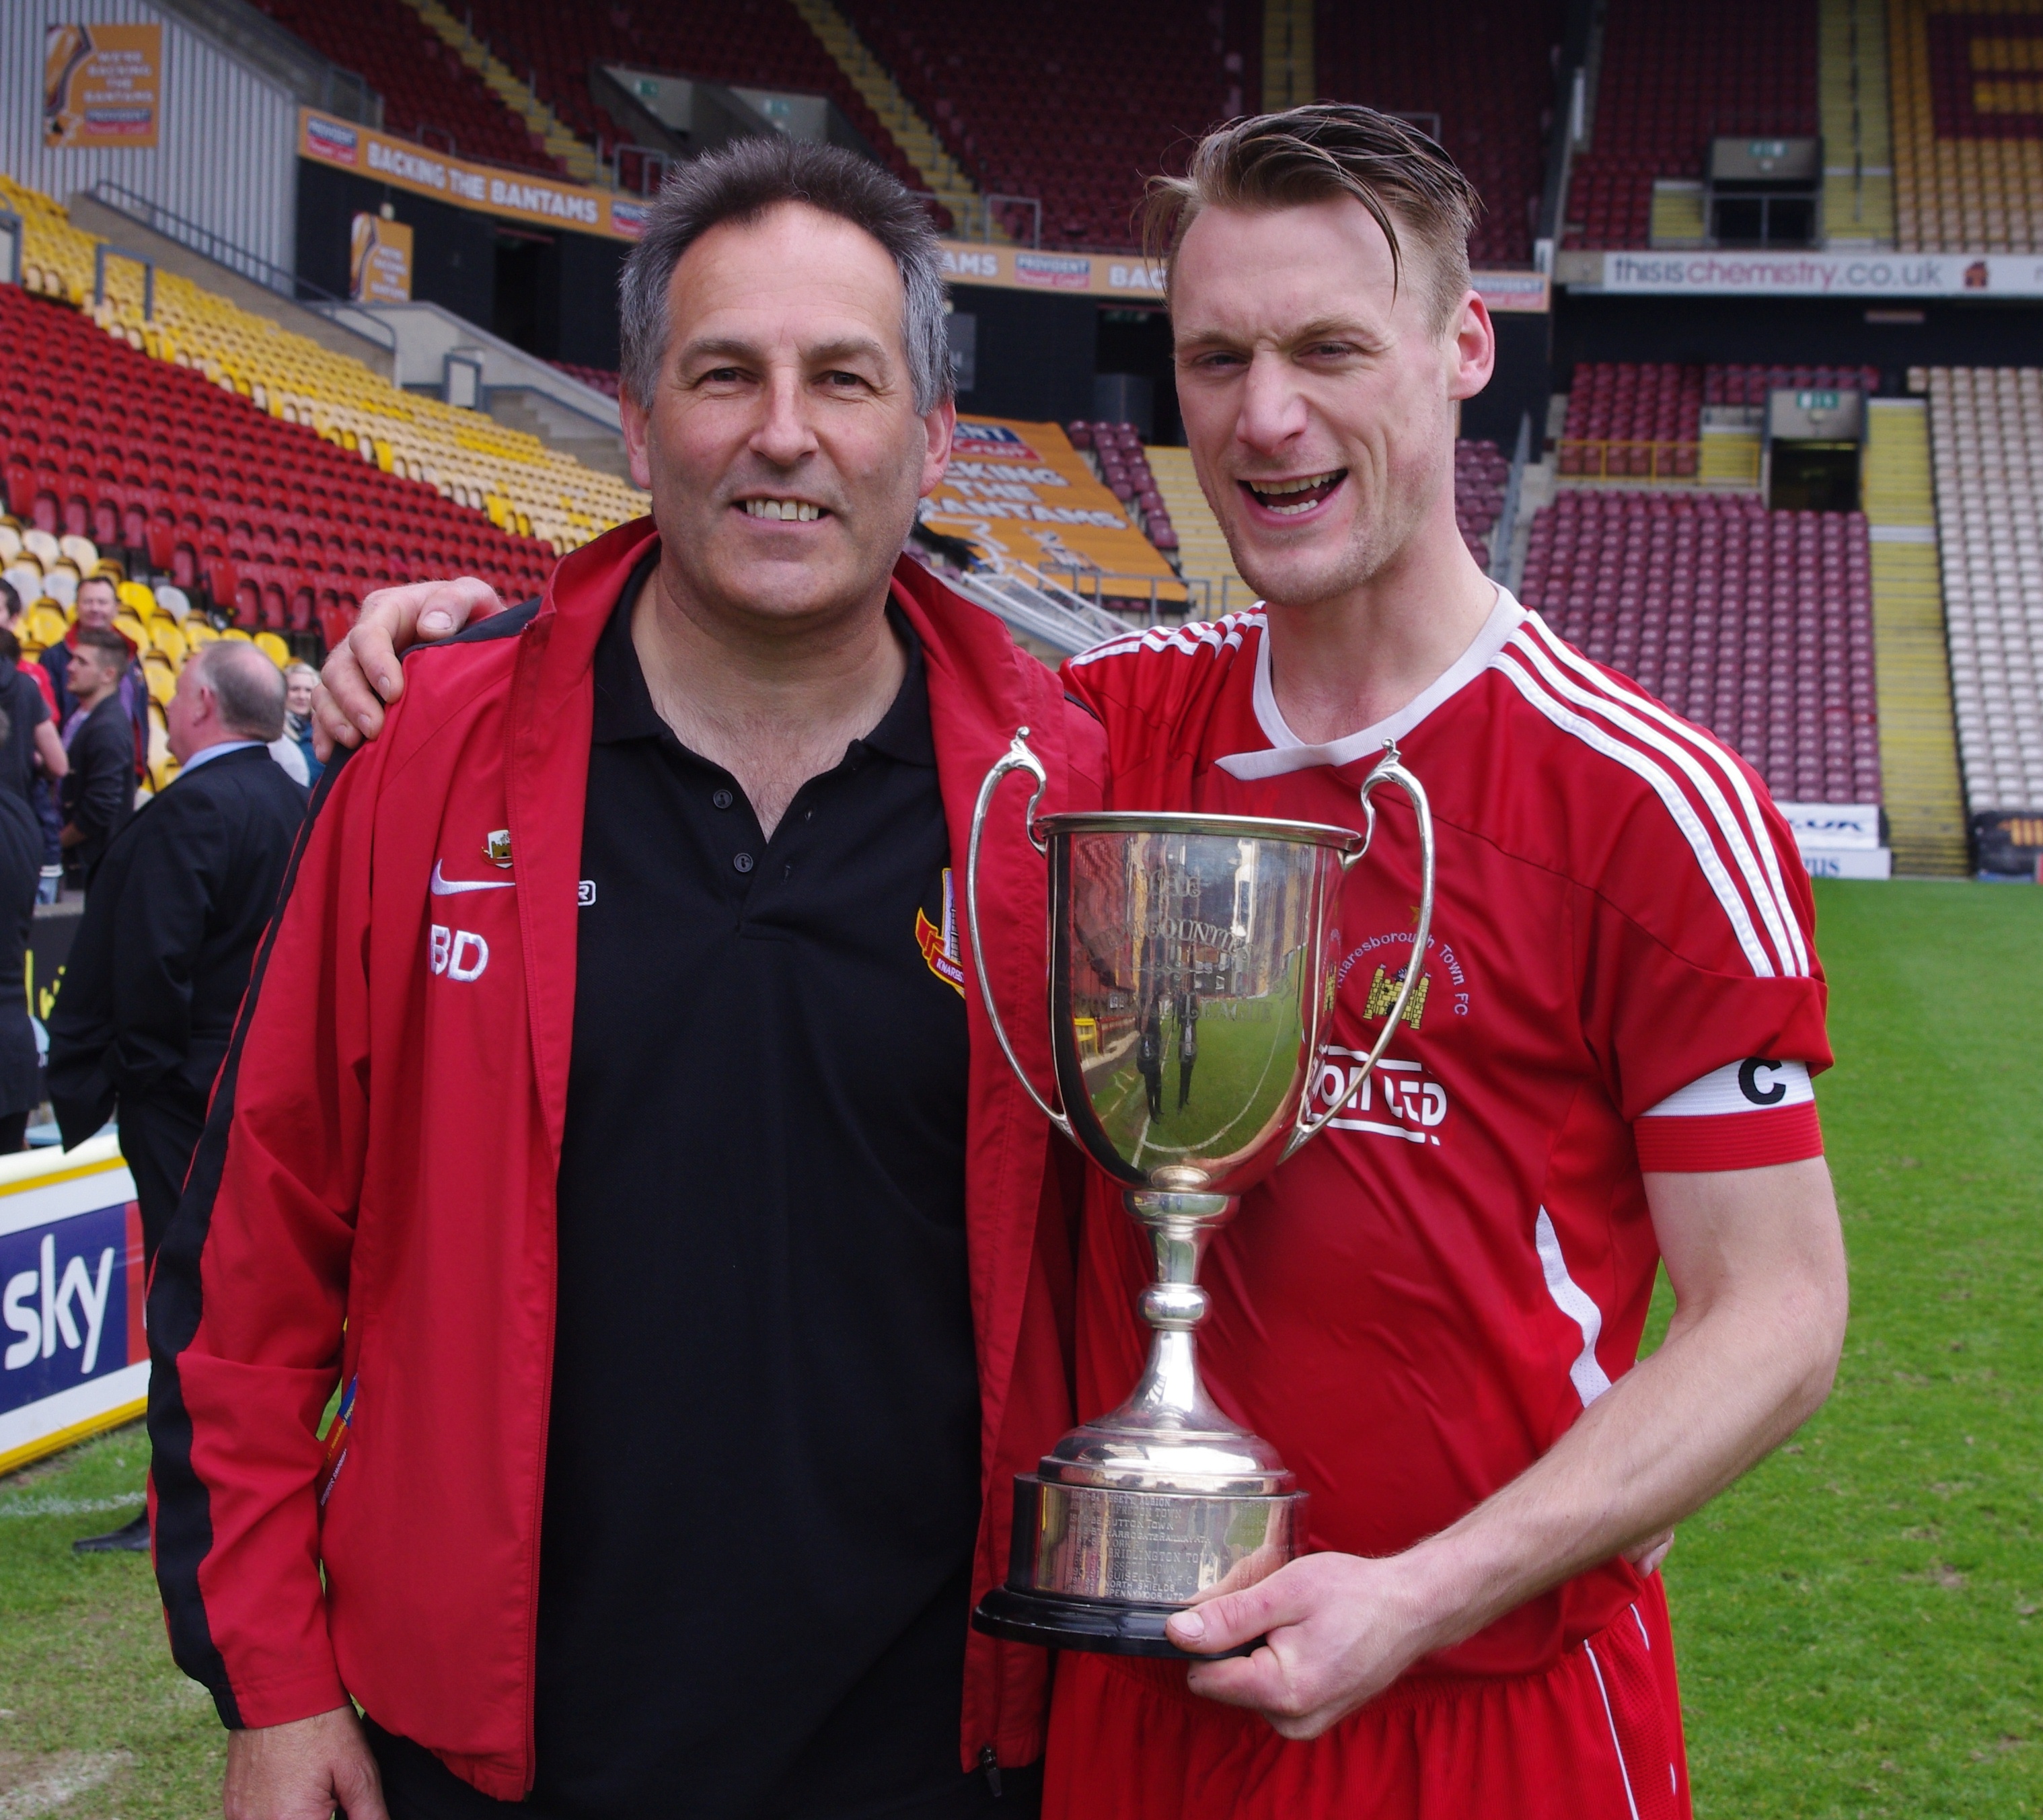 Ambitious Knaresborough Town manager Brian Davey and his captain Matt Duerden with the NCEL League Cup trophy